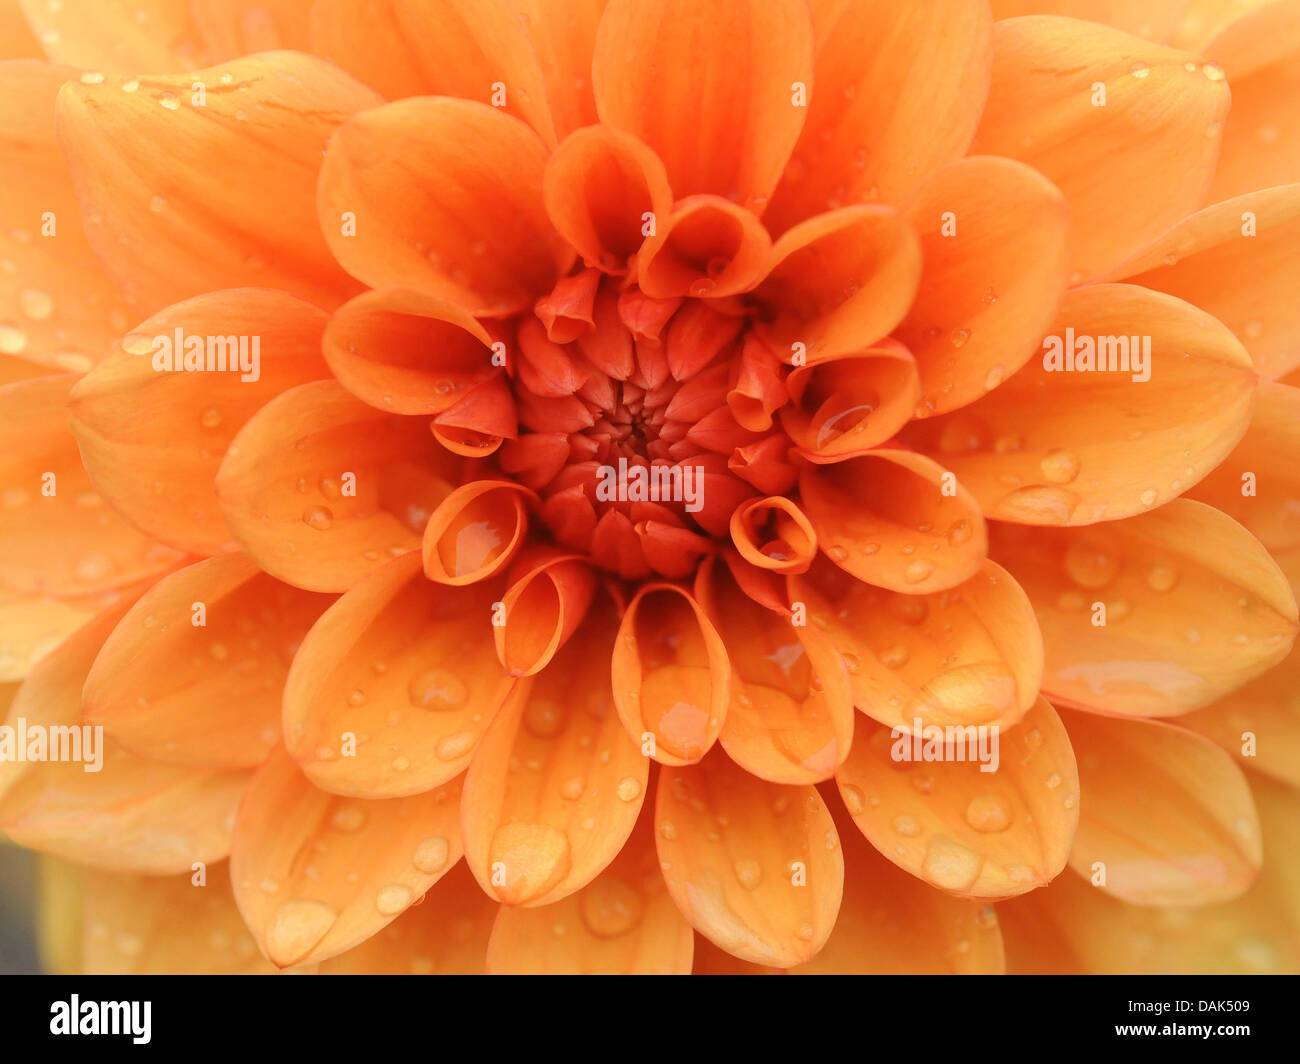 A bright orange decorative dahlia flower. Stock Photo